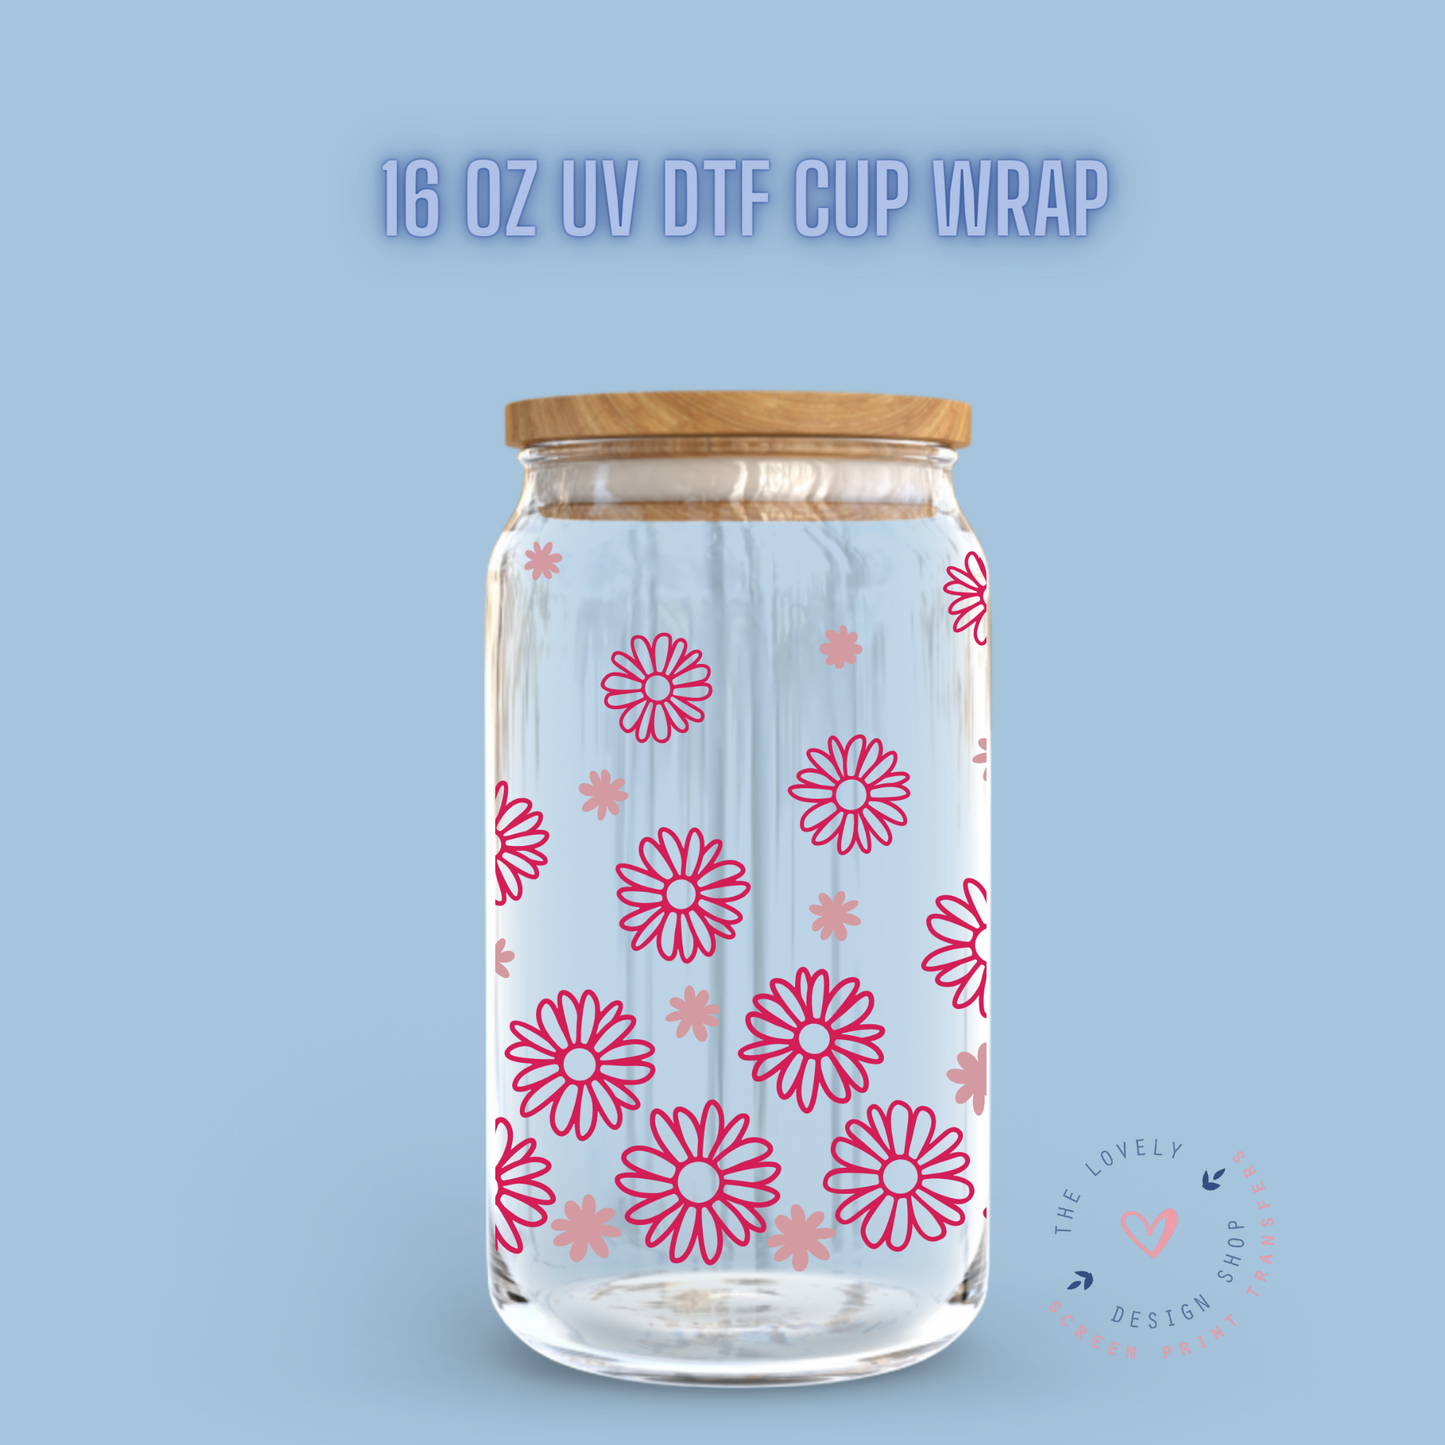 Flower Confetti - UV DTF 16 oz Libbey Cup Wrap (Ready to Ship) Jan 29